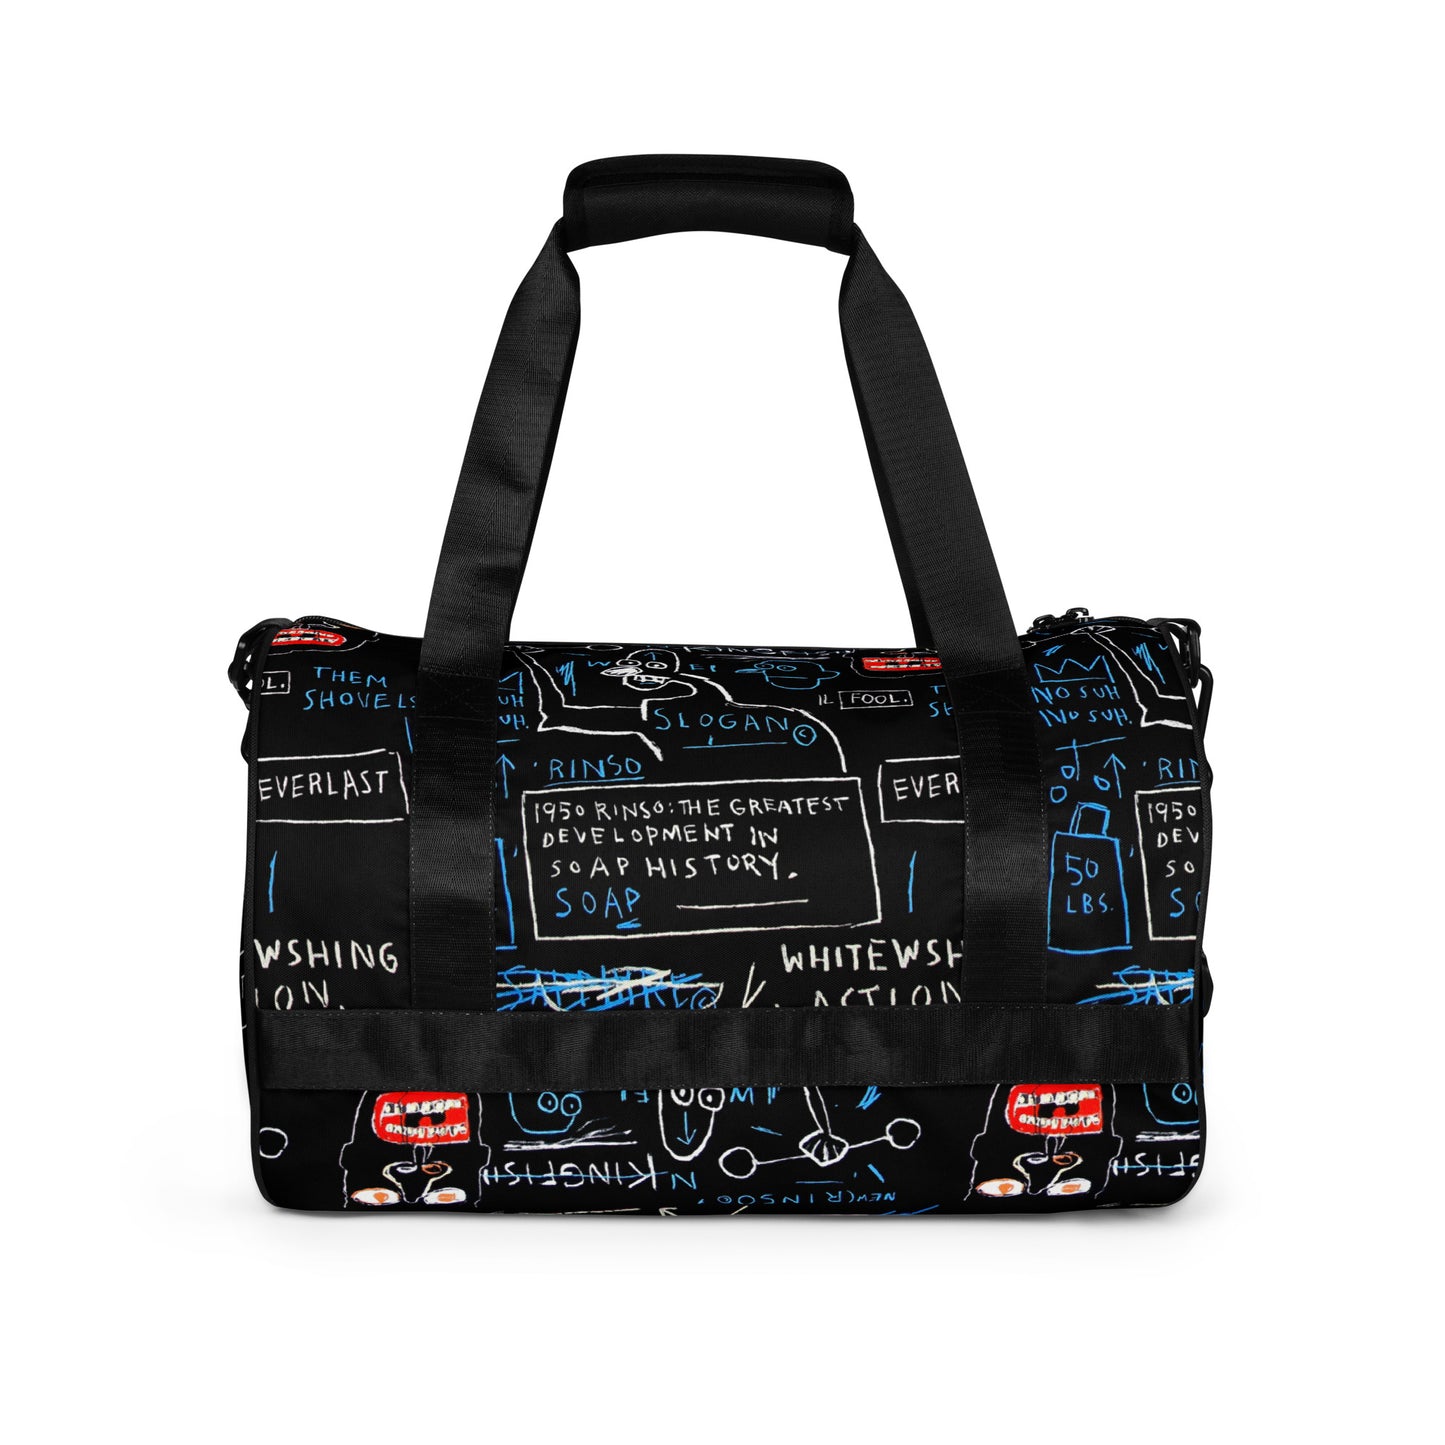 Jean-Michel Basquiat "Rinso" Artwork Gym Bag